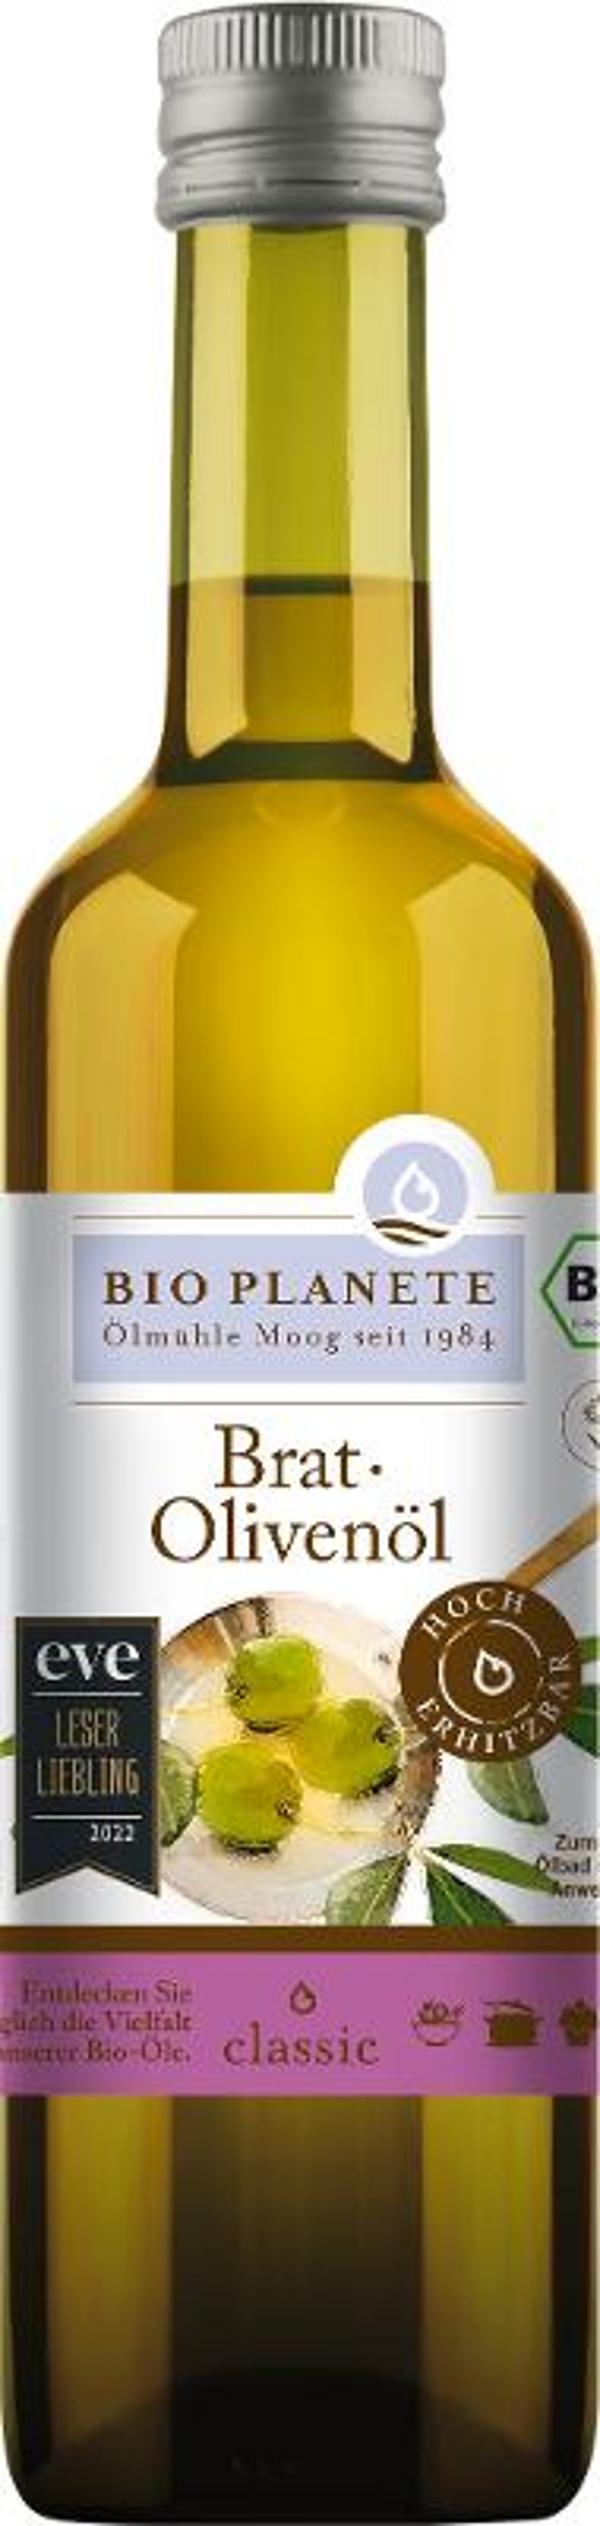 Produktfoto zu Brat-Olivenöl 0,5l